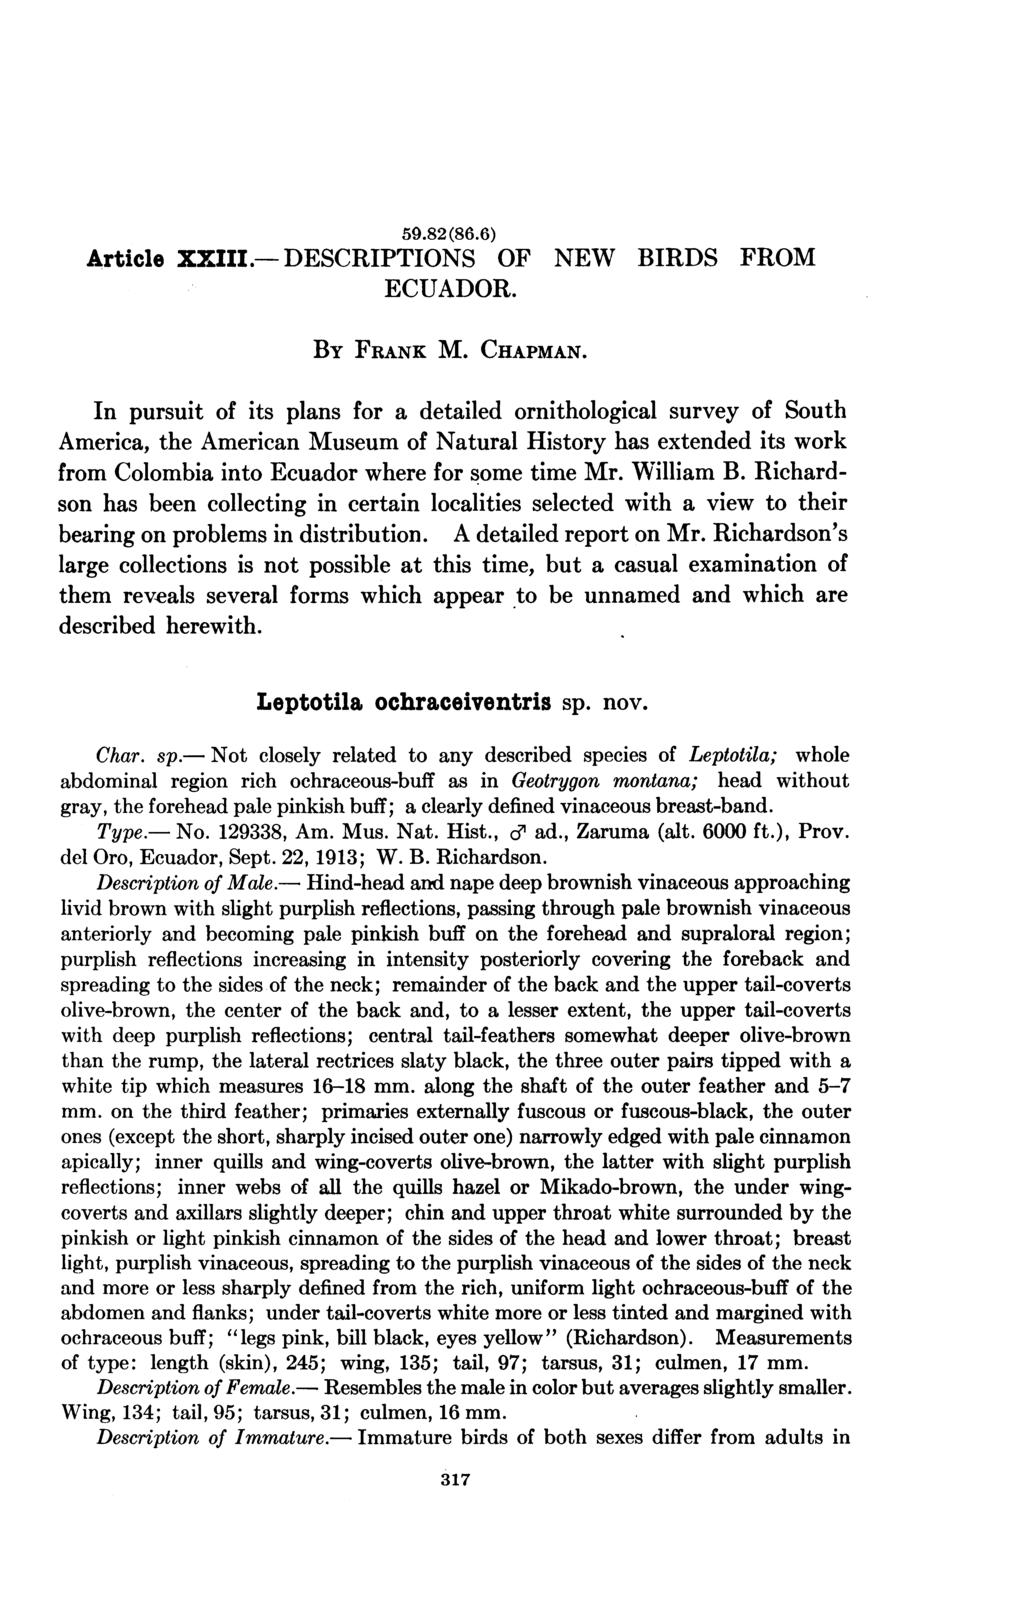 59.82(86.6) Article XXIII.- DESCRIPTIONS OF NEW BIRDS FROM ECUADOR. BY FRANK M. CHAPMAN.